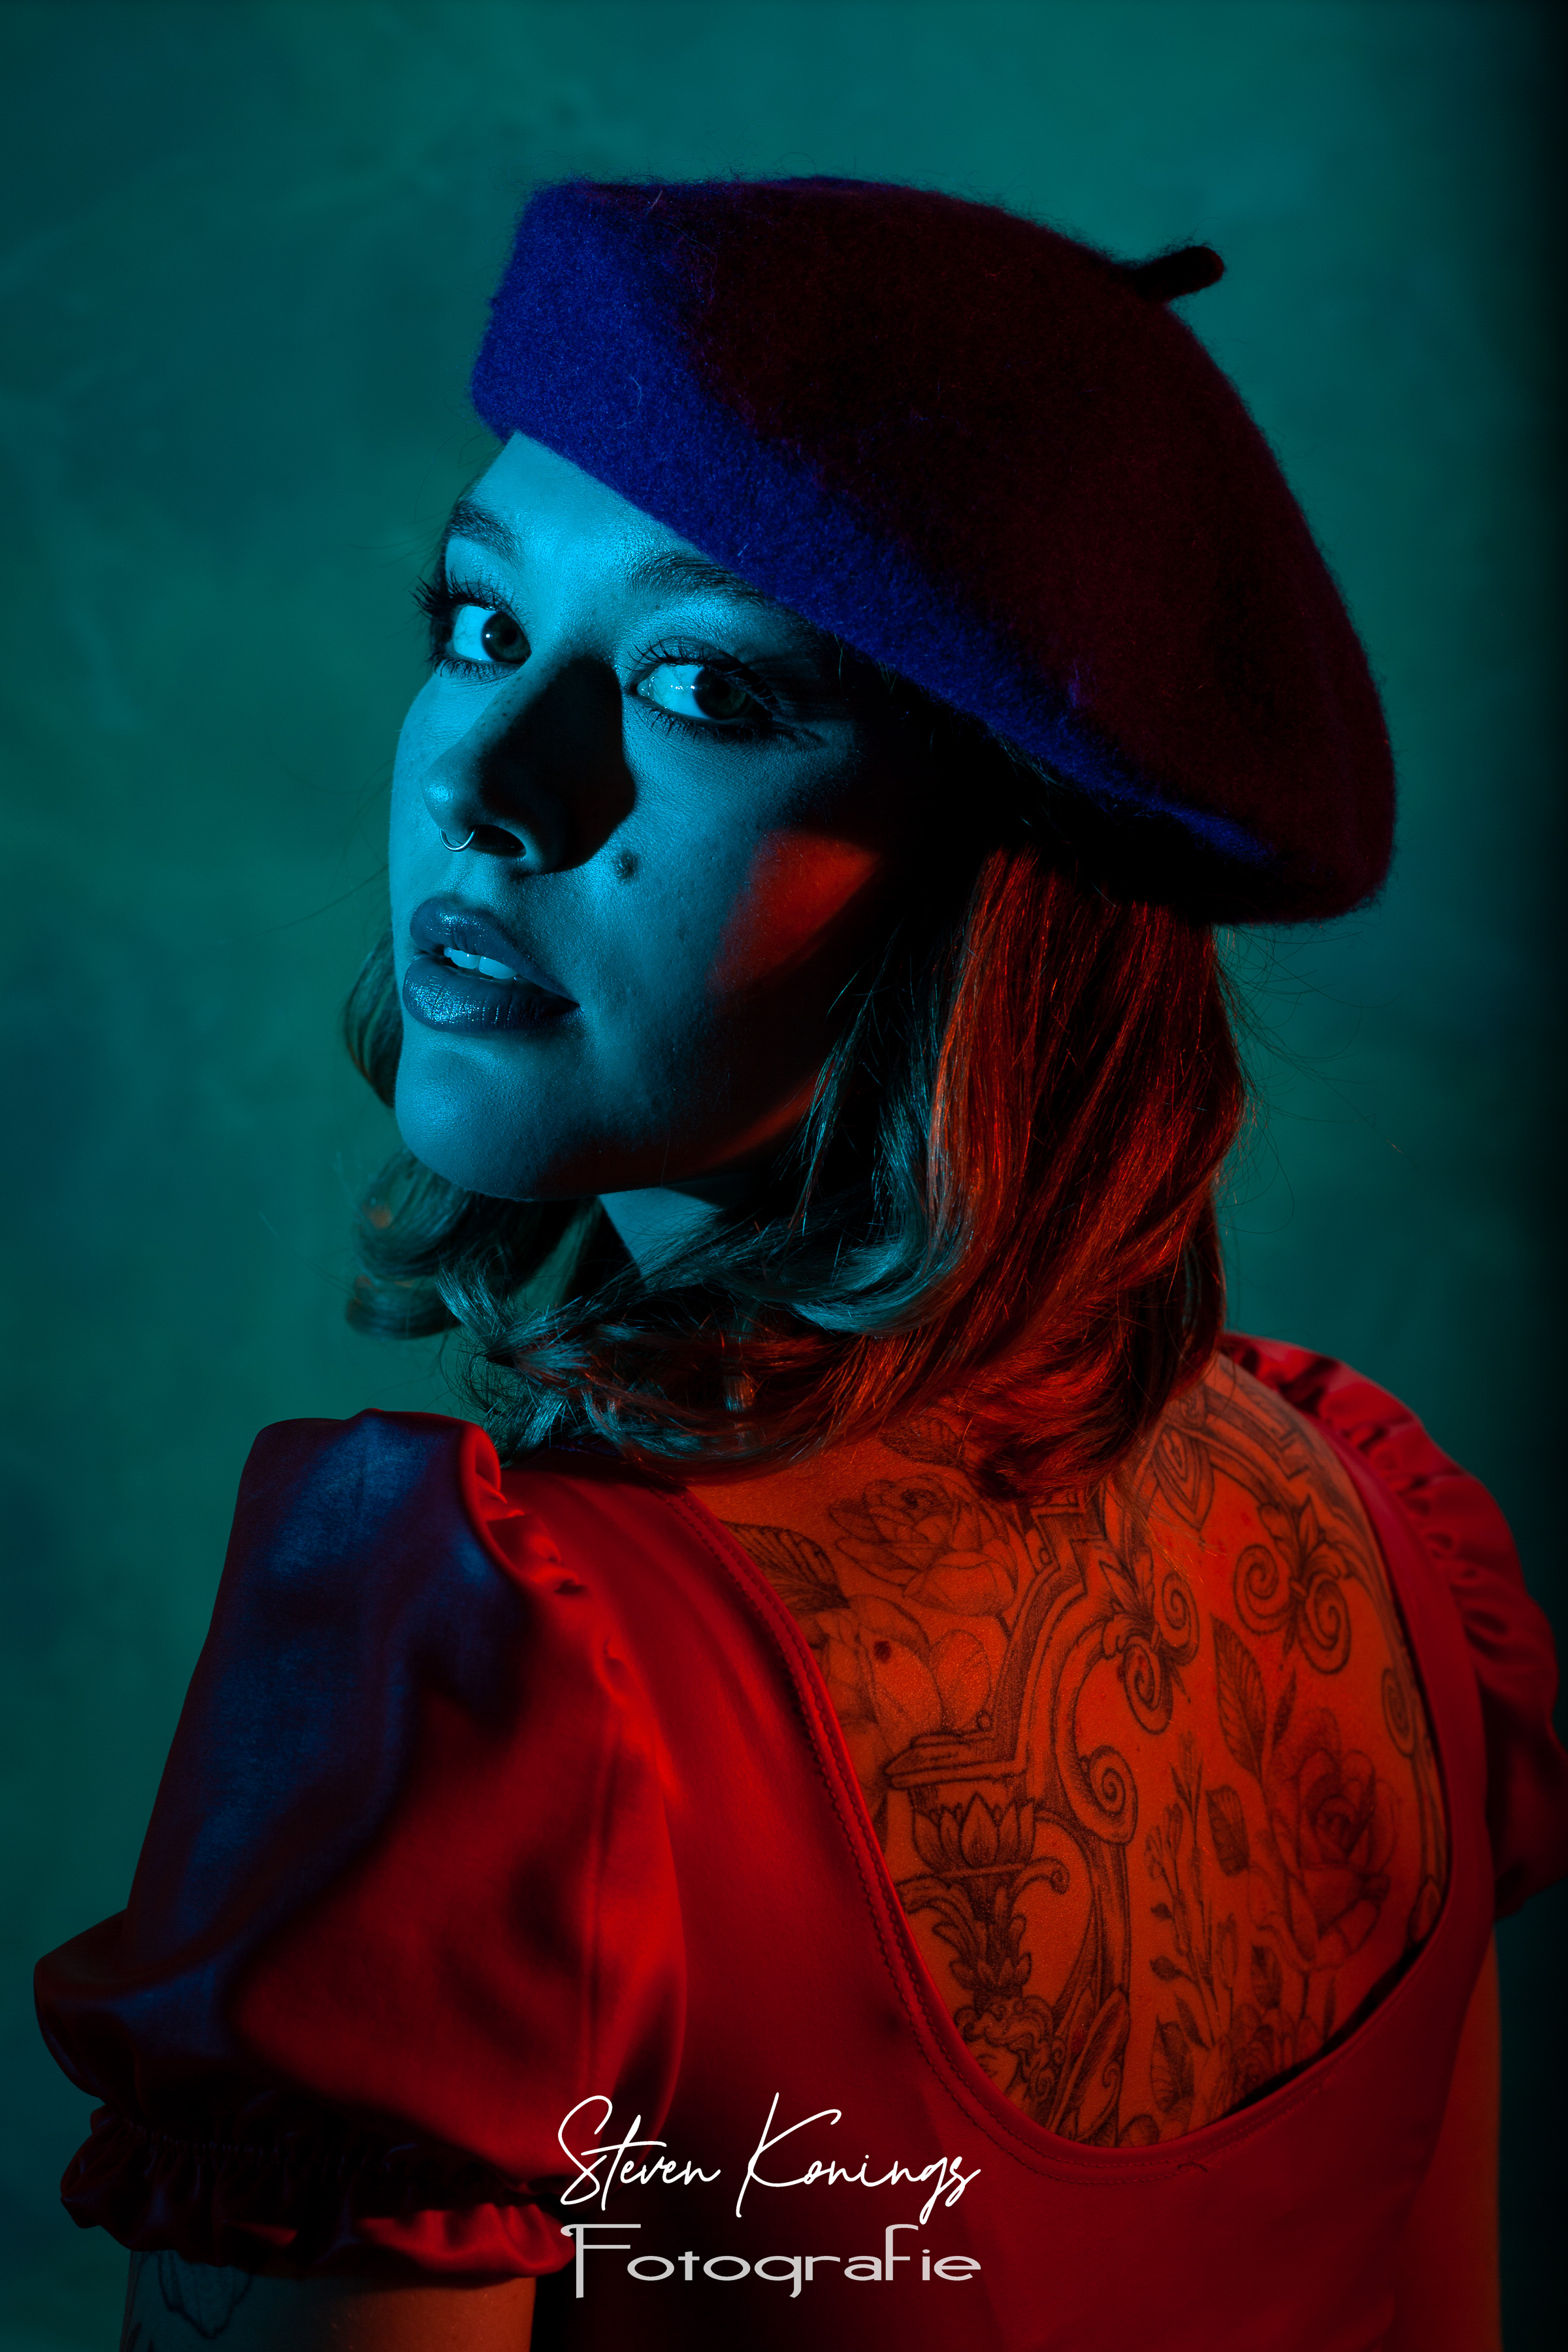 fotograaf Steven Konings Fotografie - model Kim
in studio met kleurenfilter
Steven Konings Fotografie